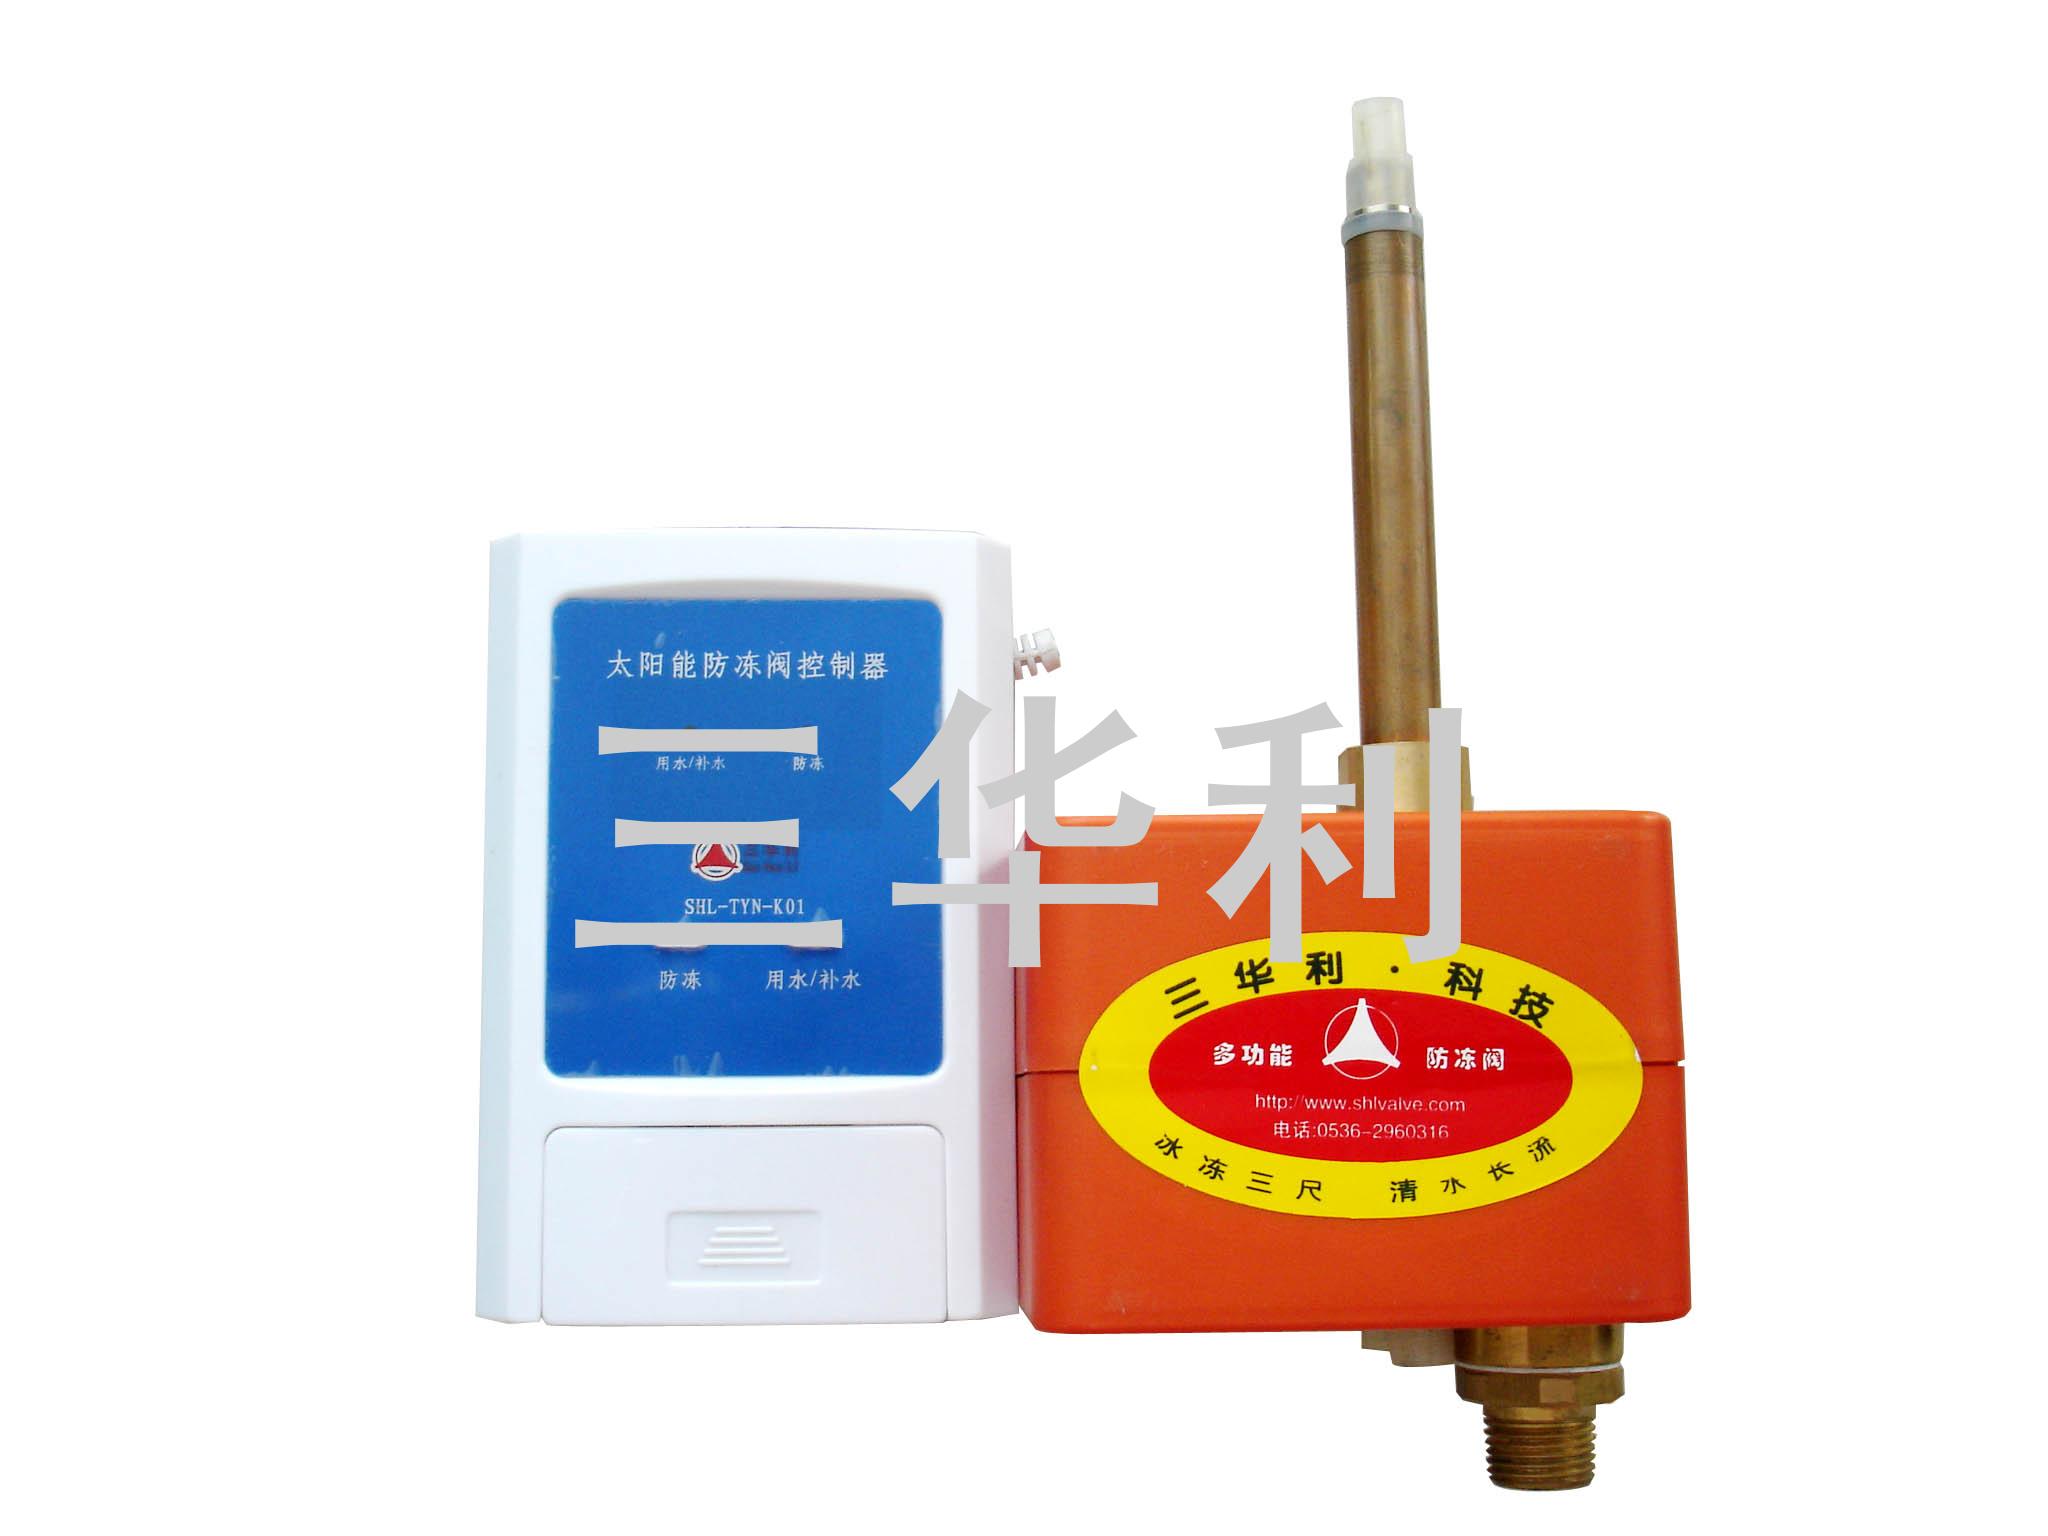 Solar antifreeze valve K01 control system